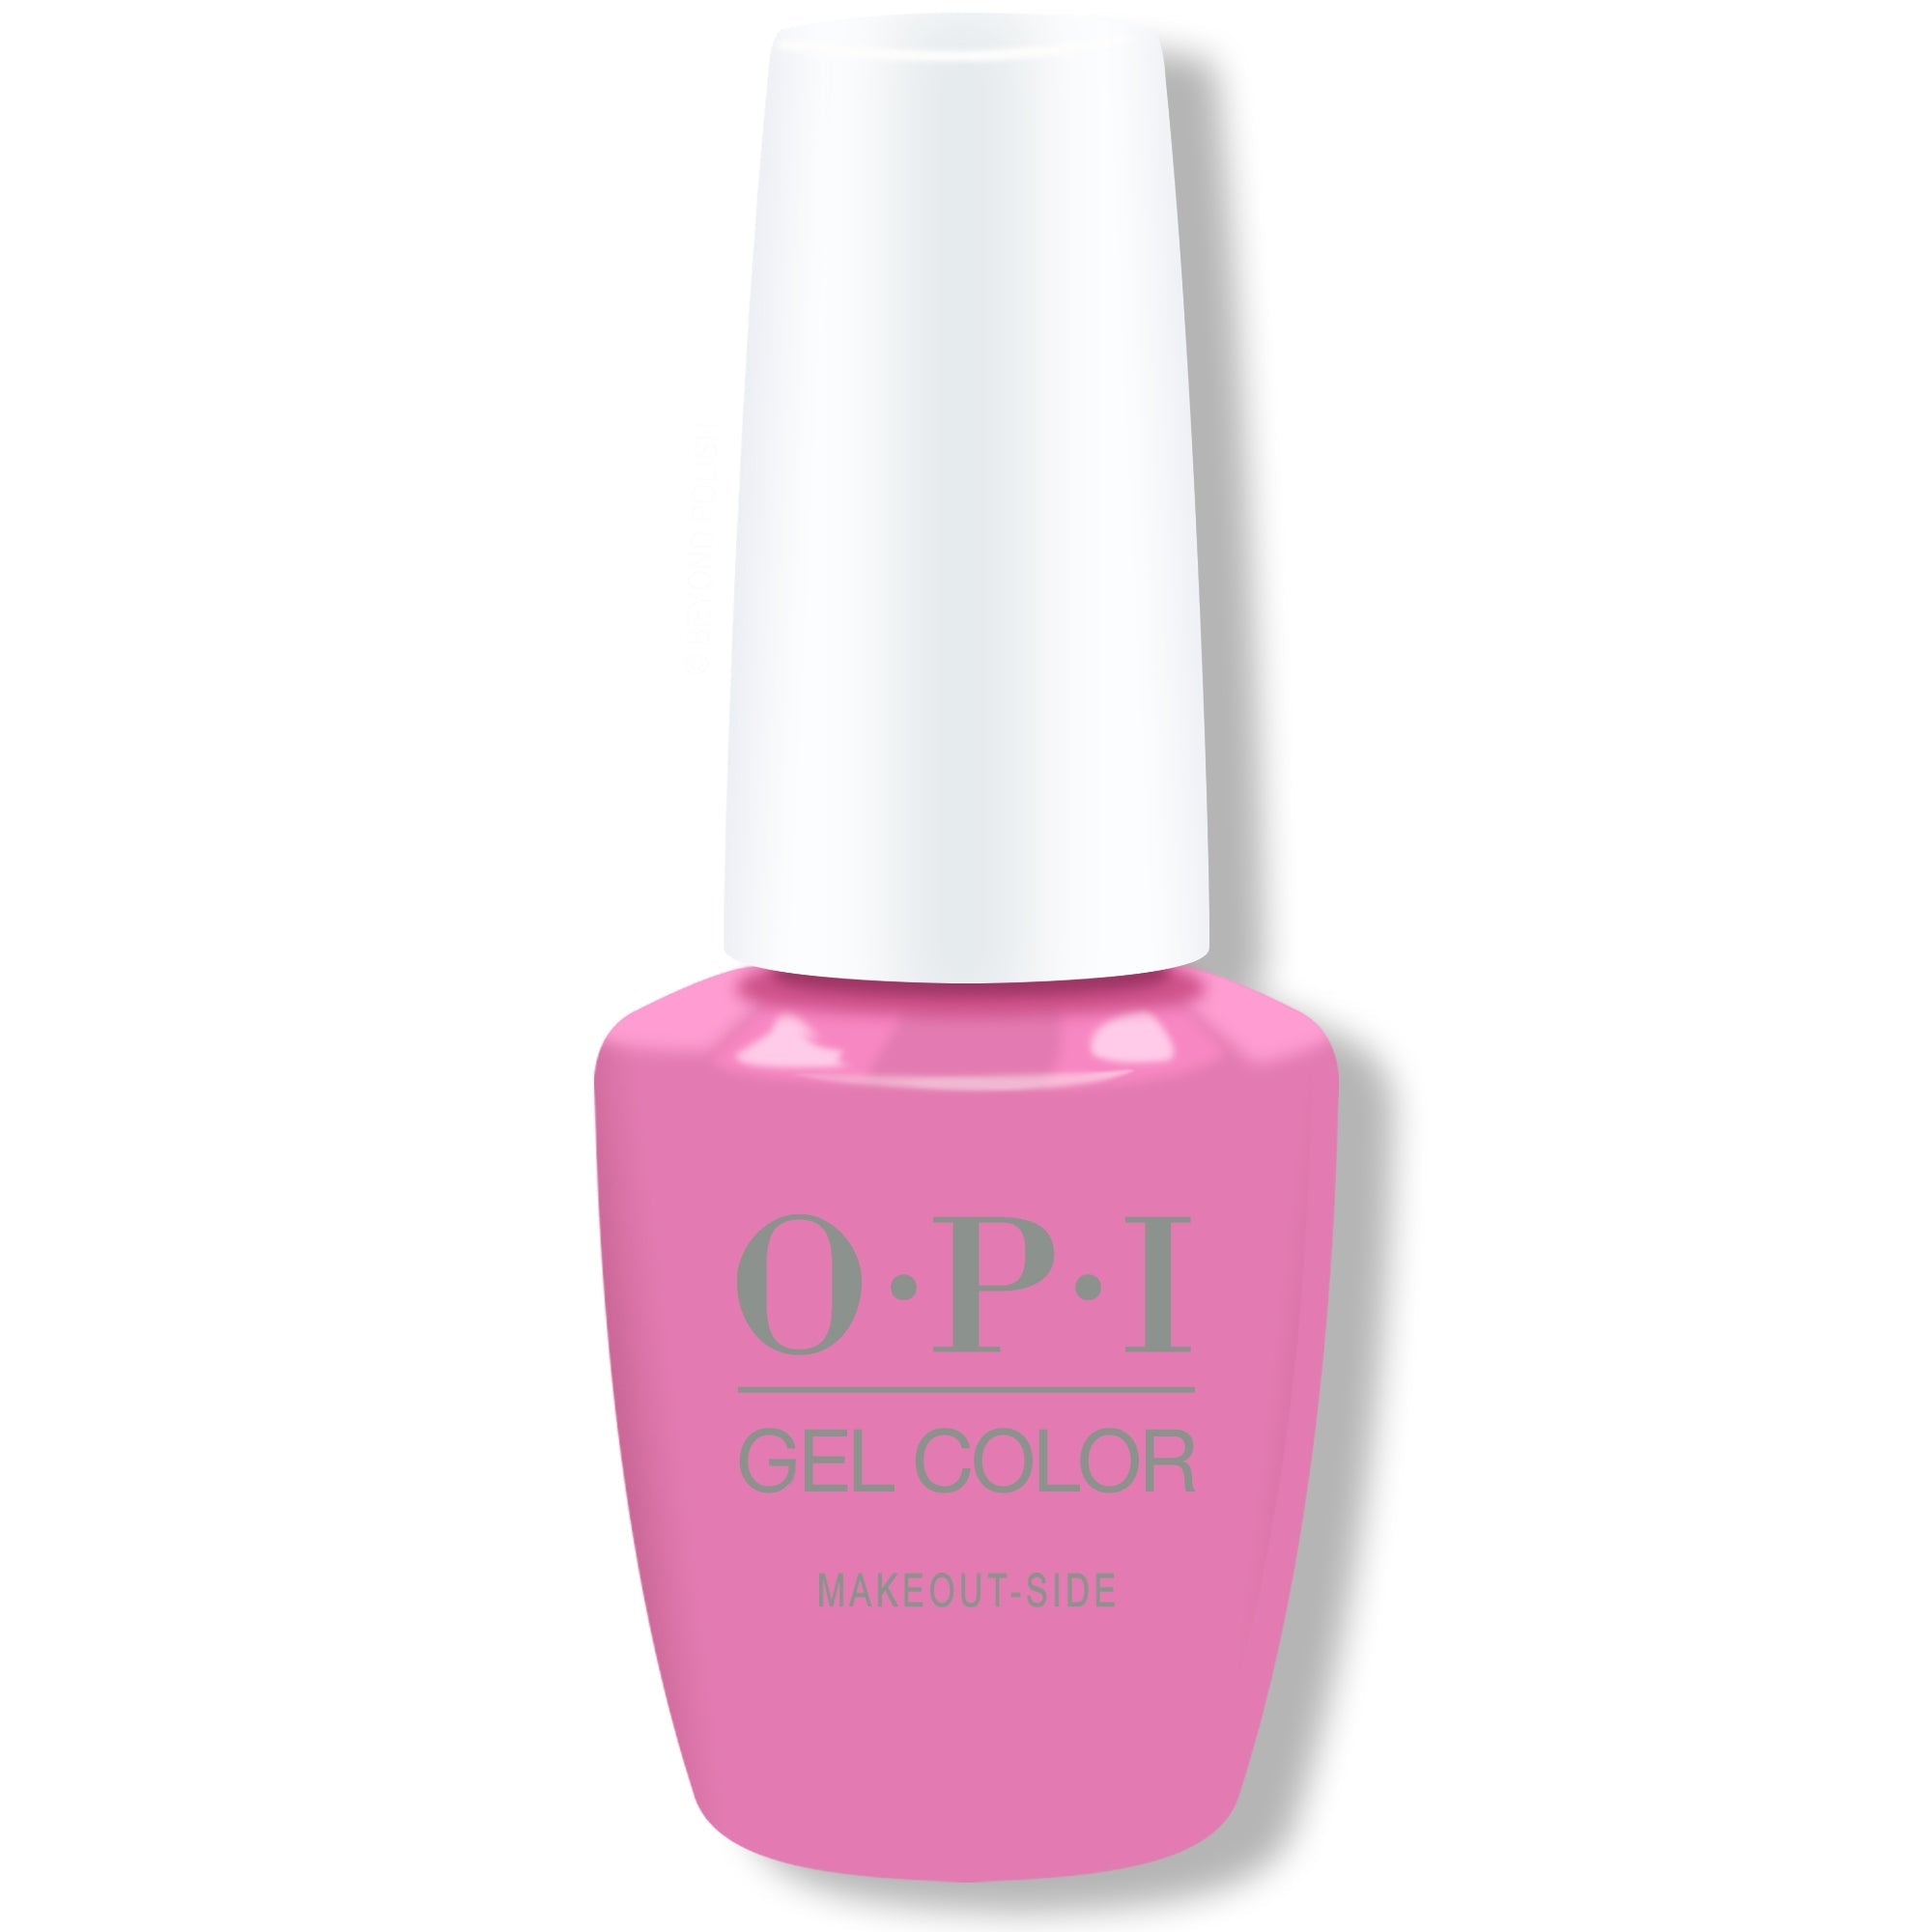 OPI GelColor - Makeout-side 0.5 oz - #GCP002